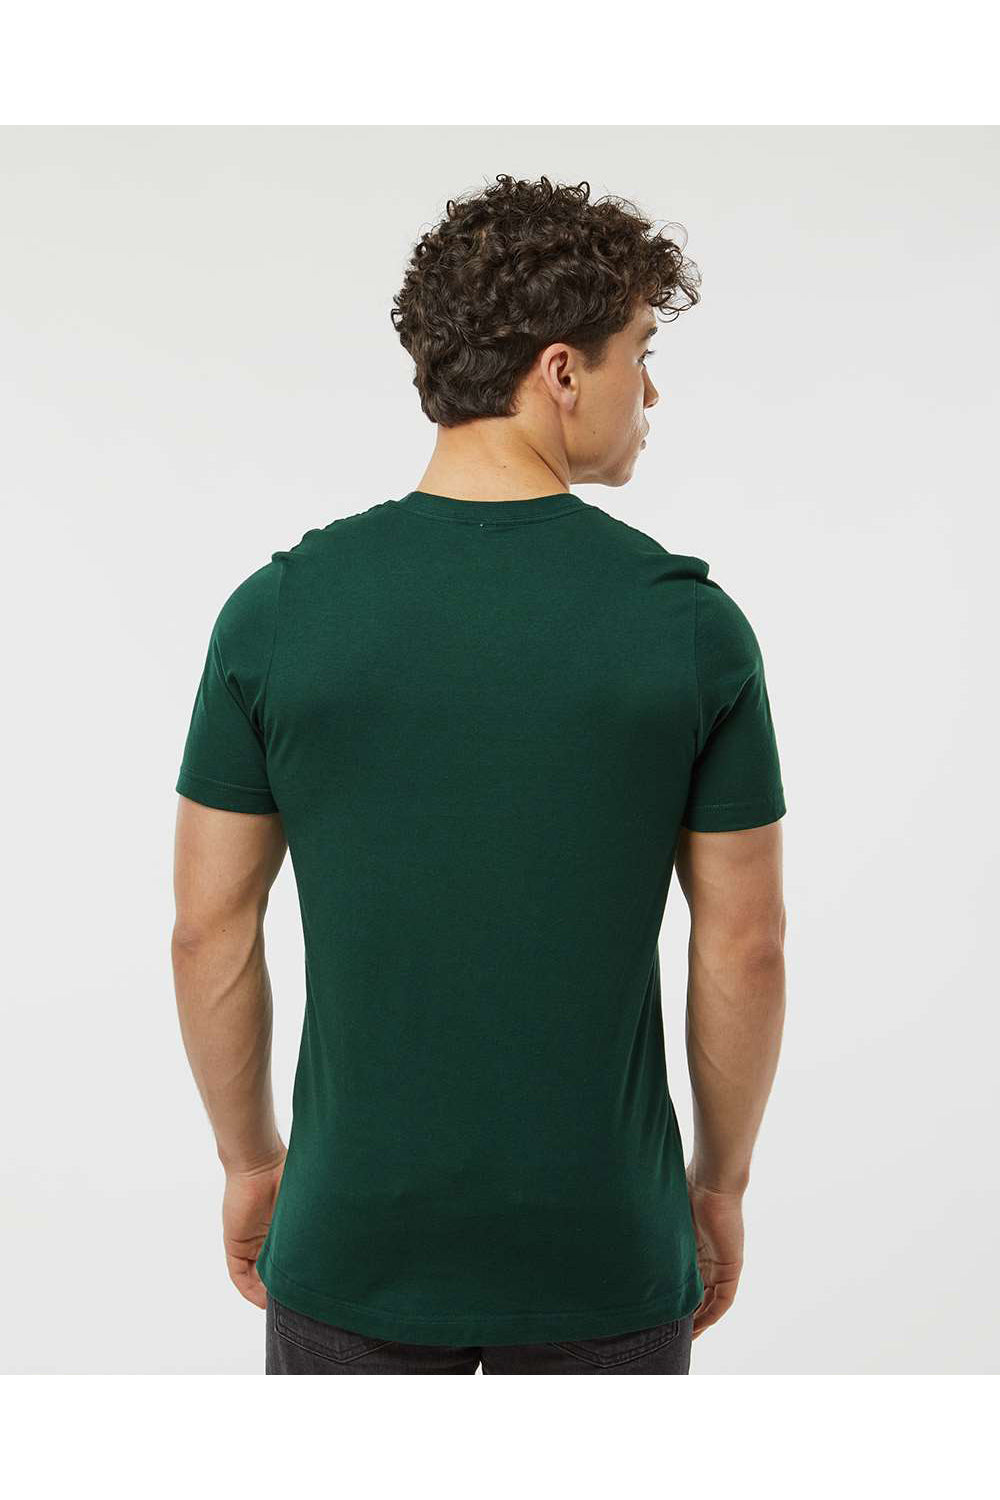 Tultex 502 Mens Premium Short Sleeve Crewneck T-Shirt Forest Green Model Back